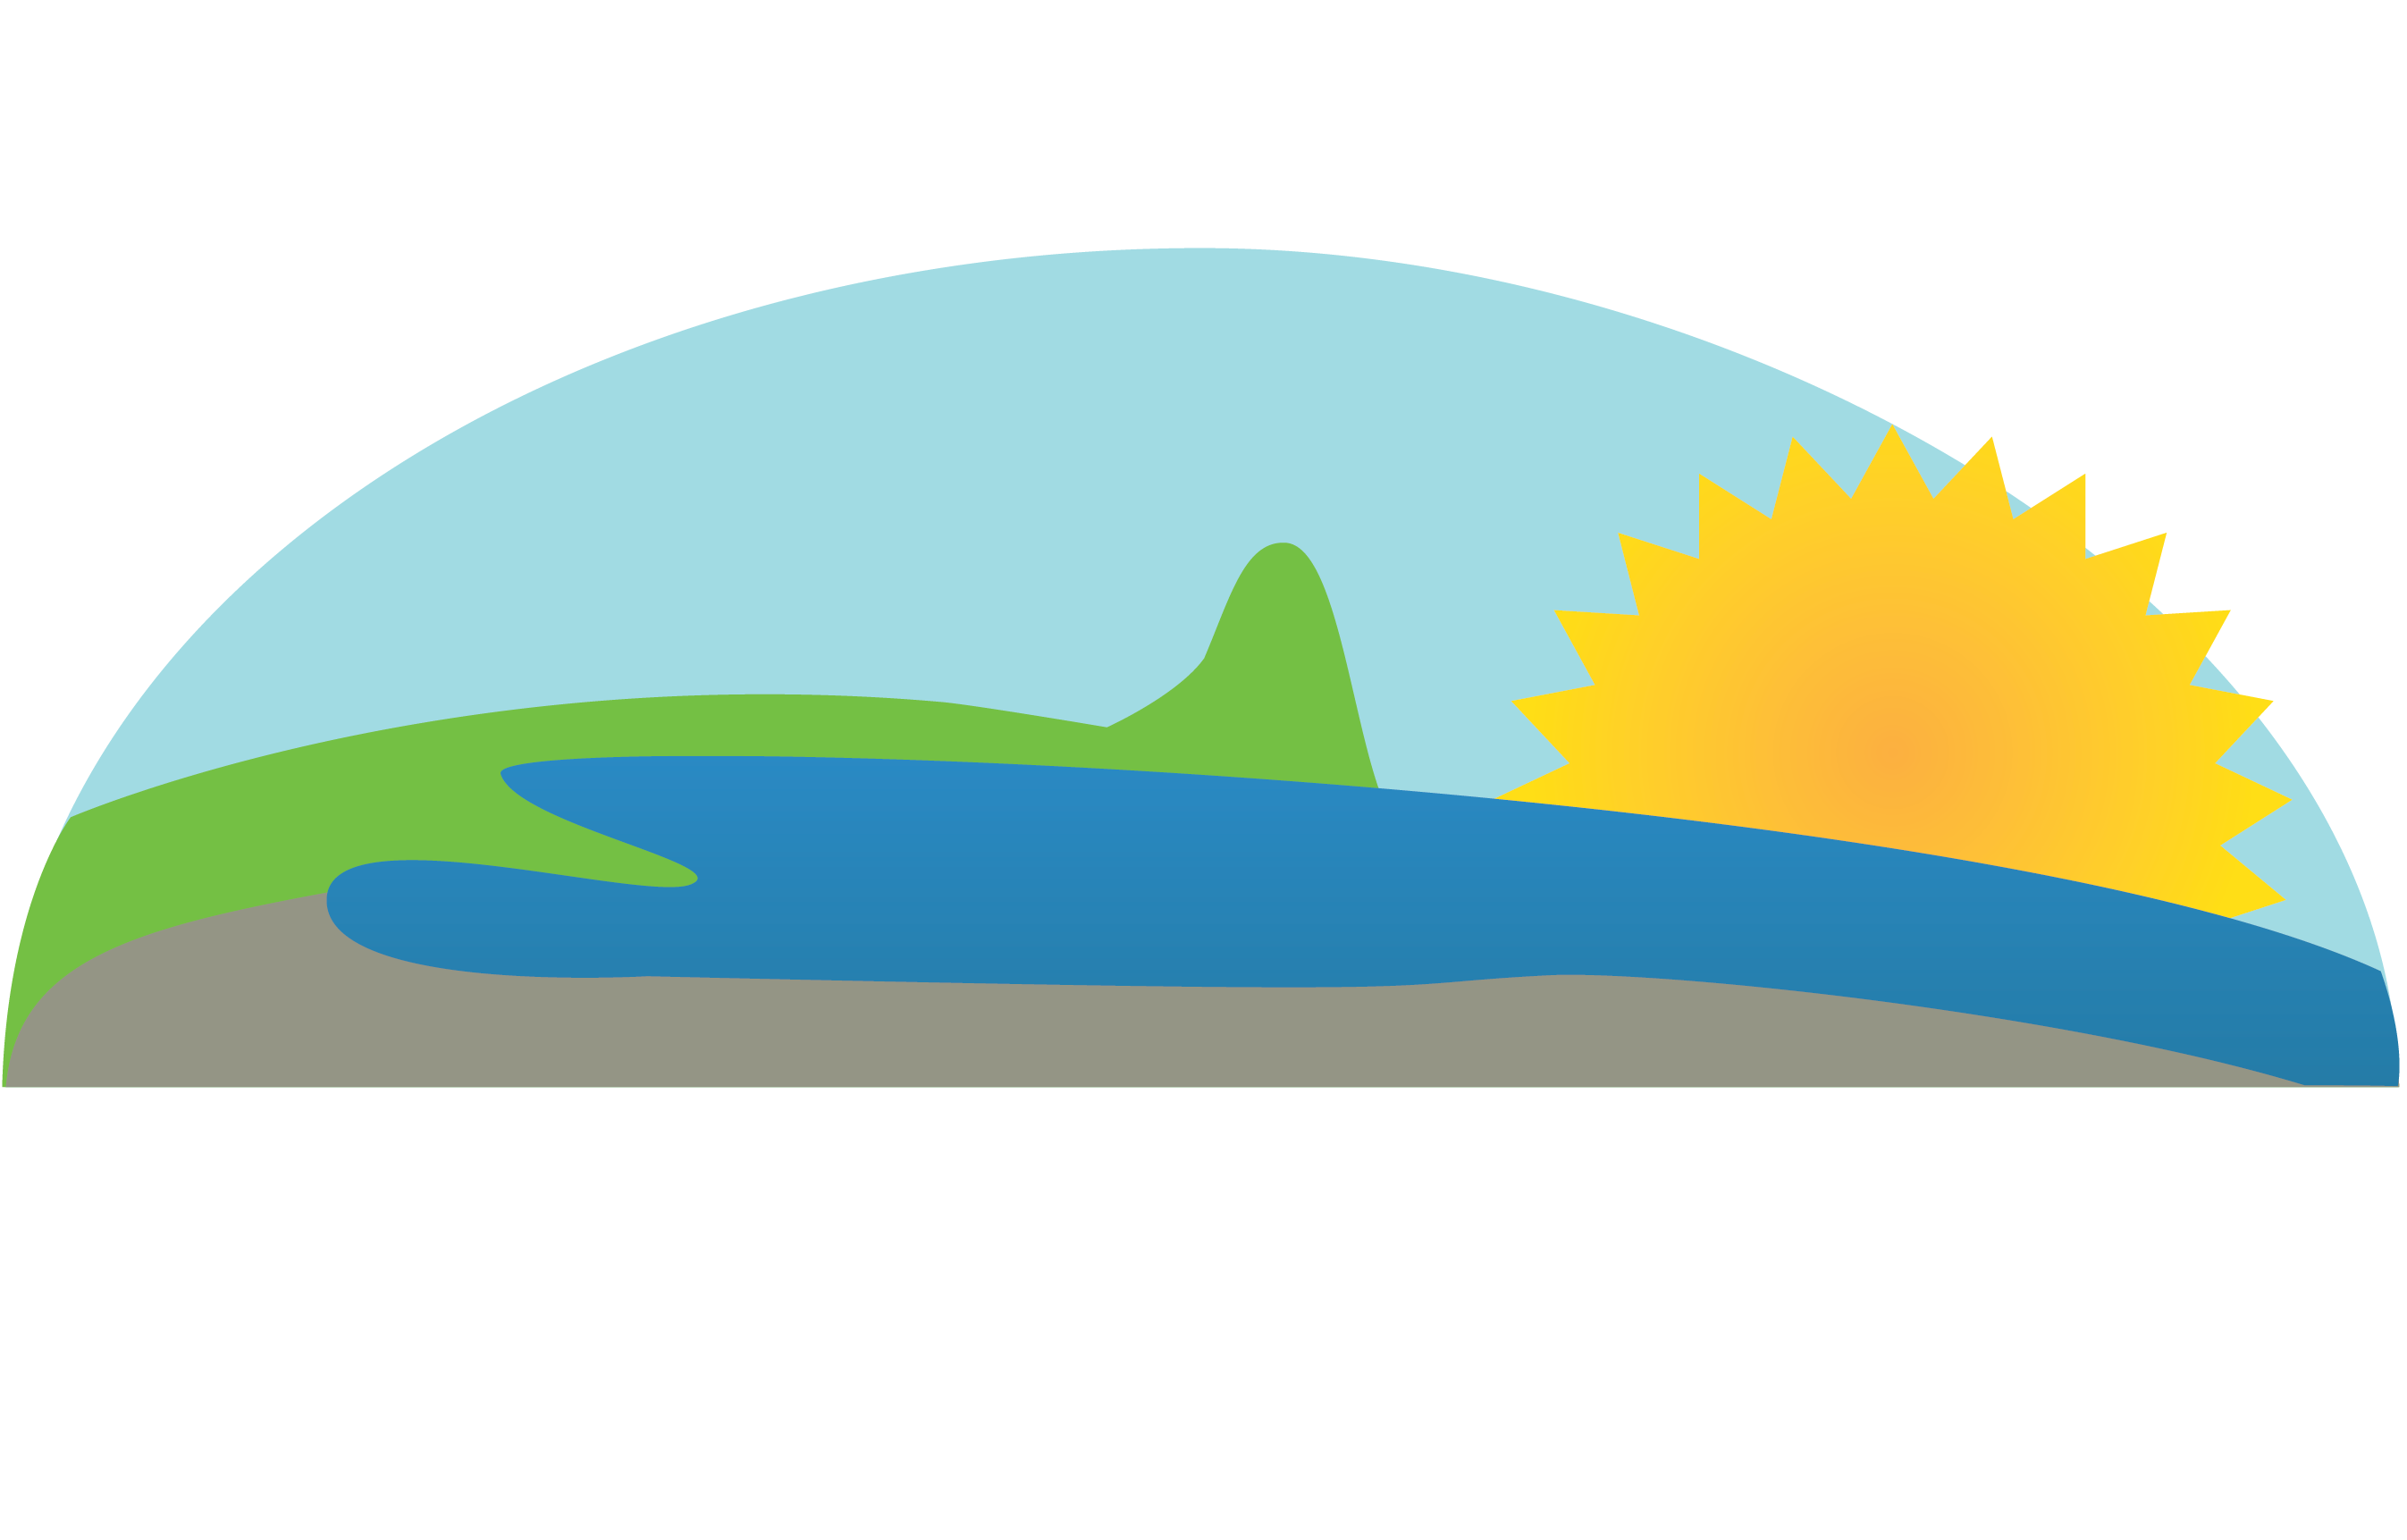 Fitzroy Beach Holiday Park